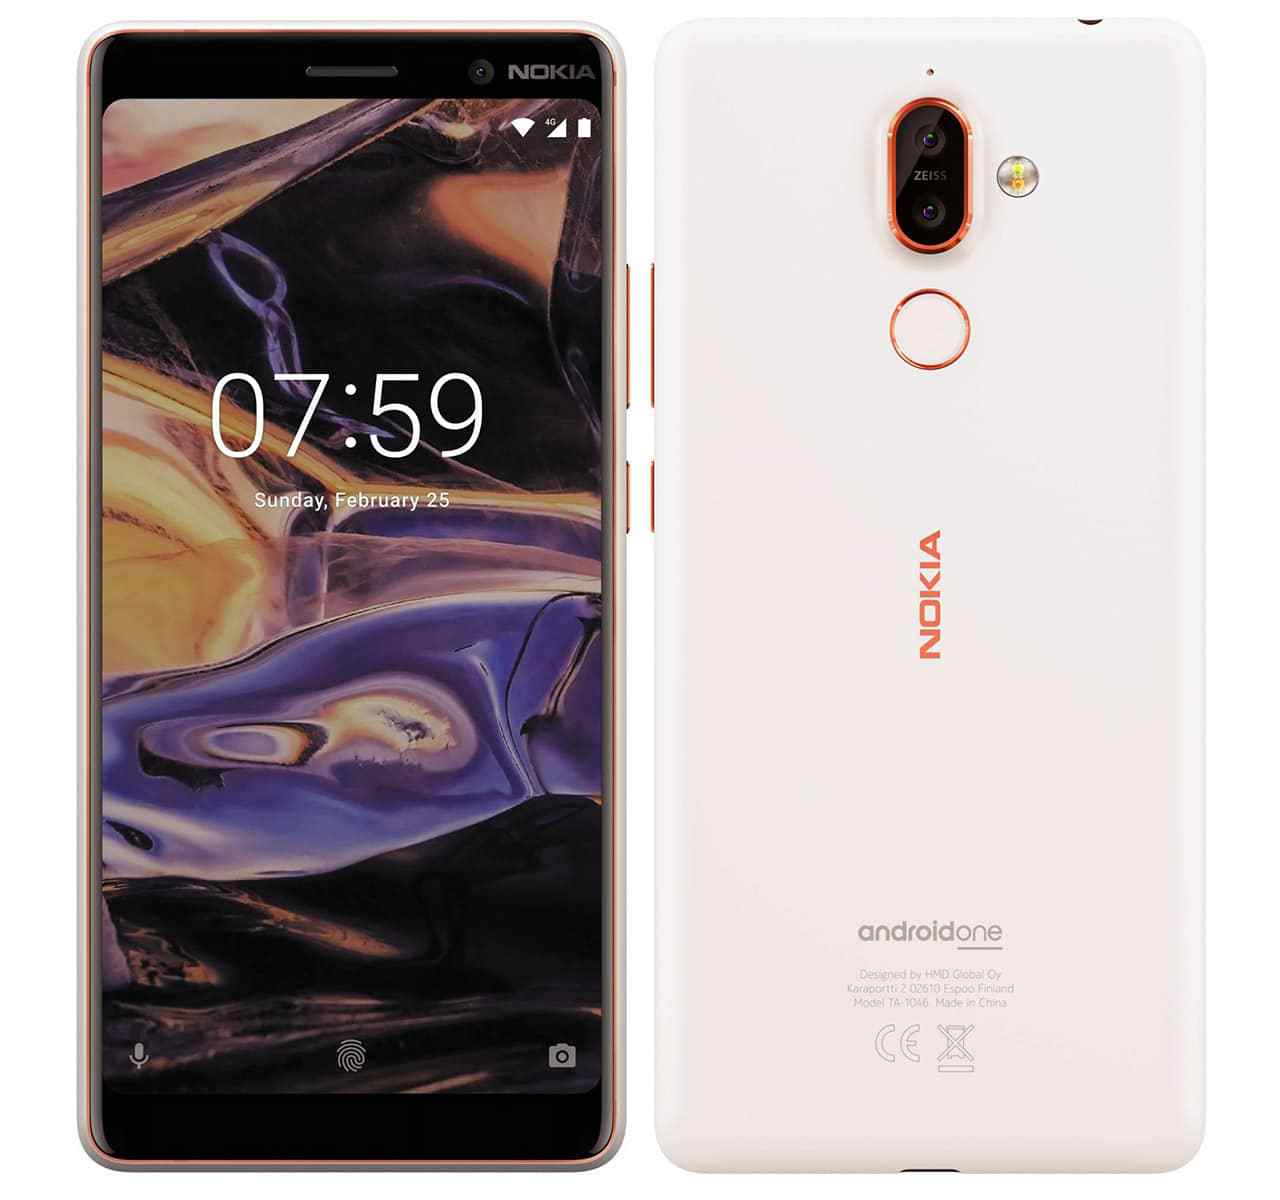 Nokia-7-Plus-Android-One-Front-White.jpg